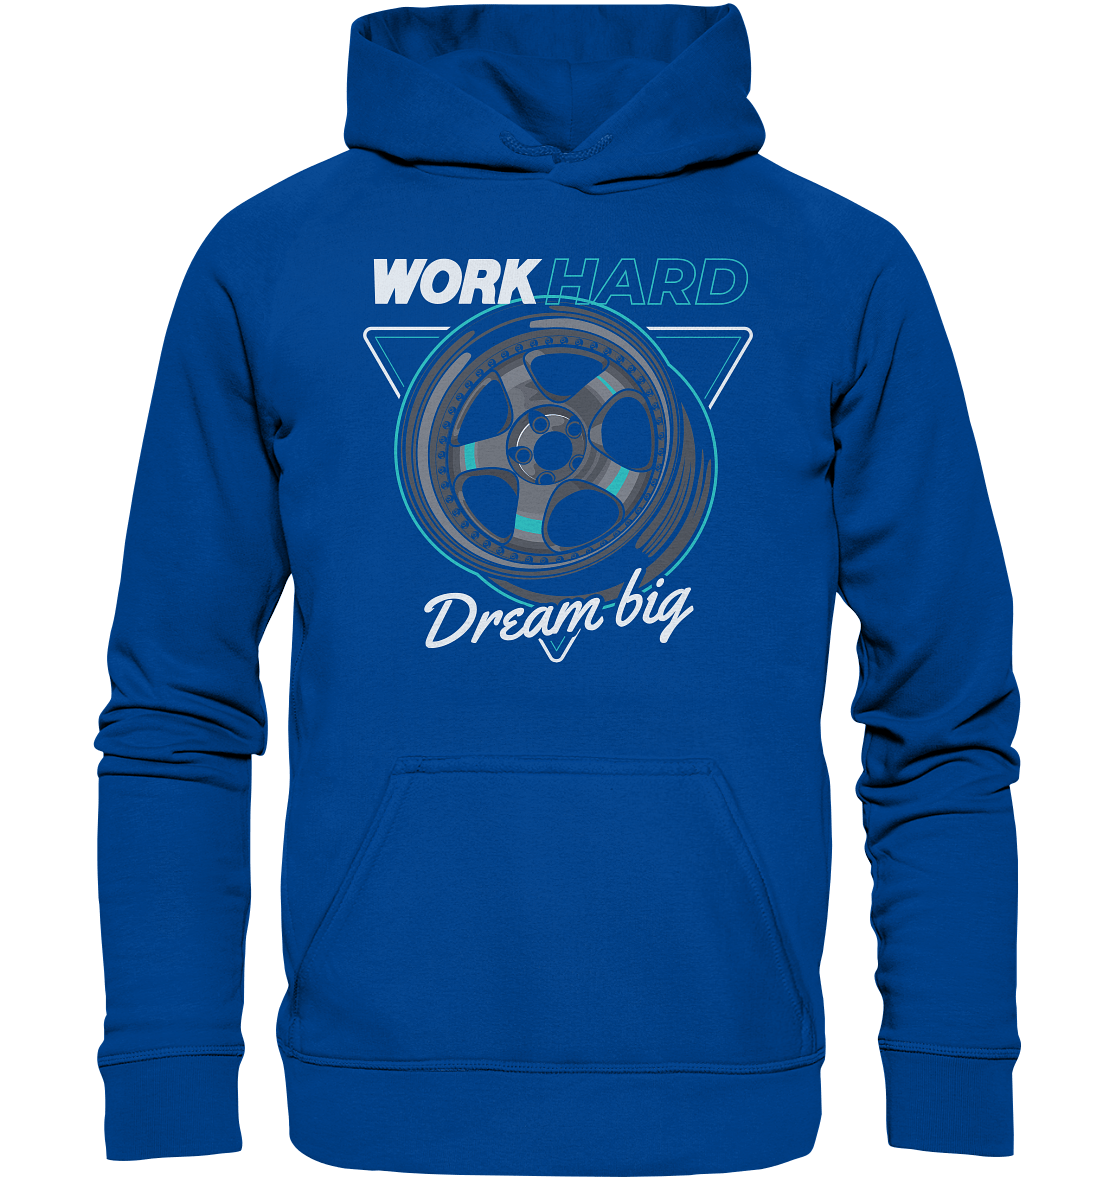 WORK hard - Basic Unisex Hoodie - MotoMerch.de